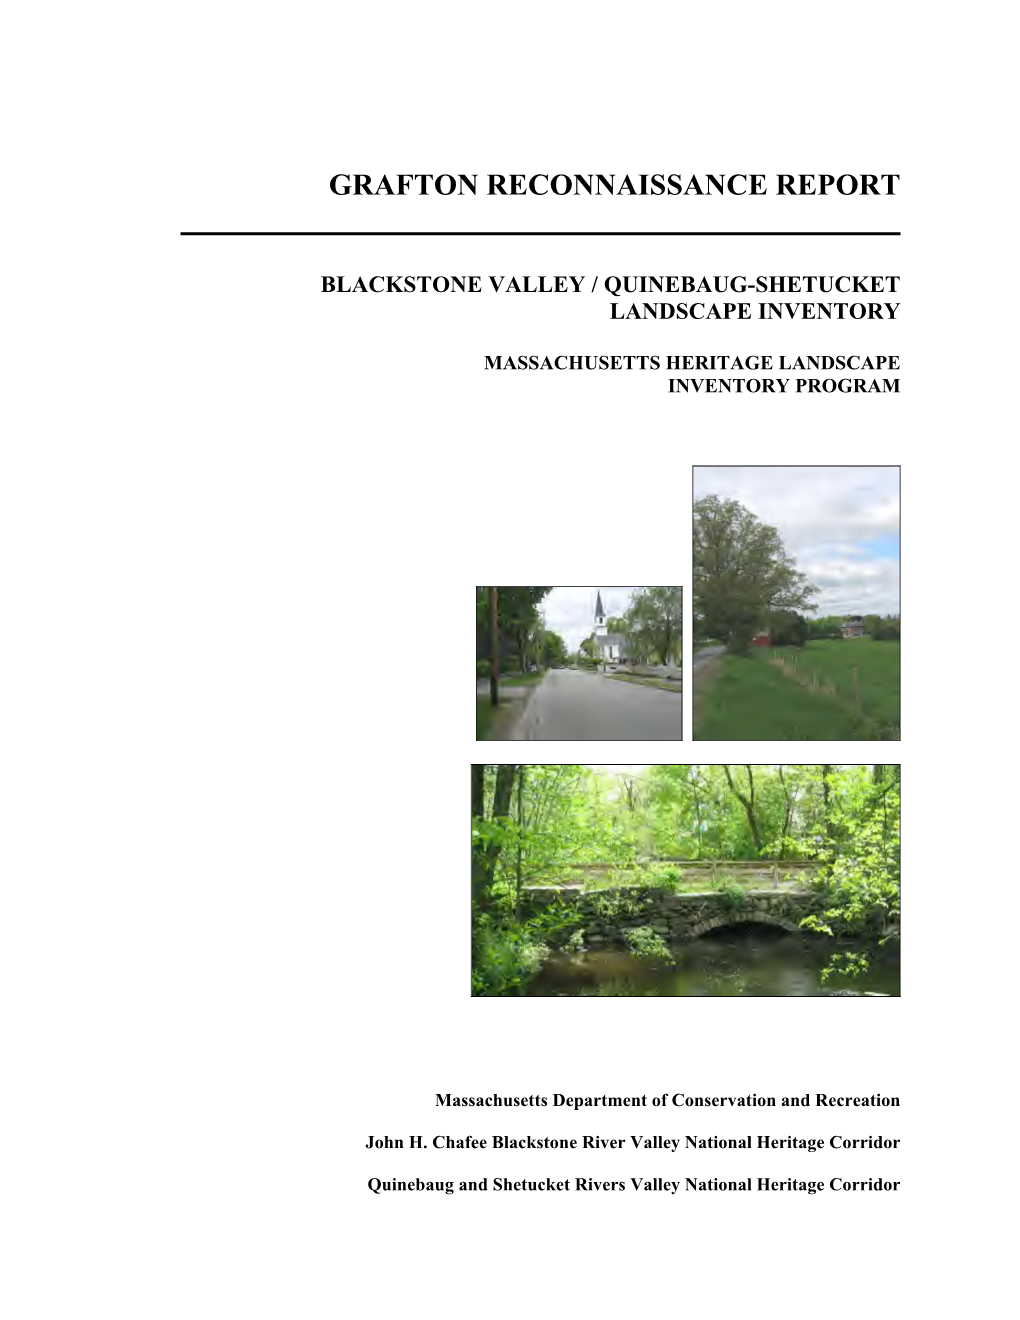 Grafton Reconnaissance Report